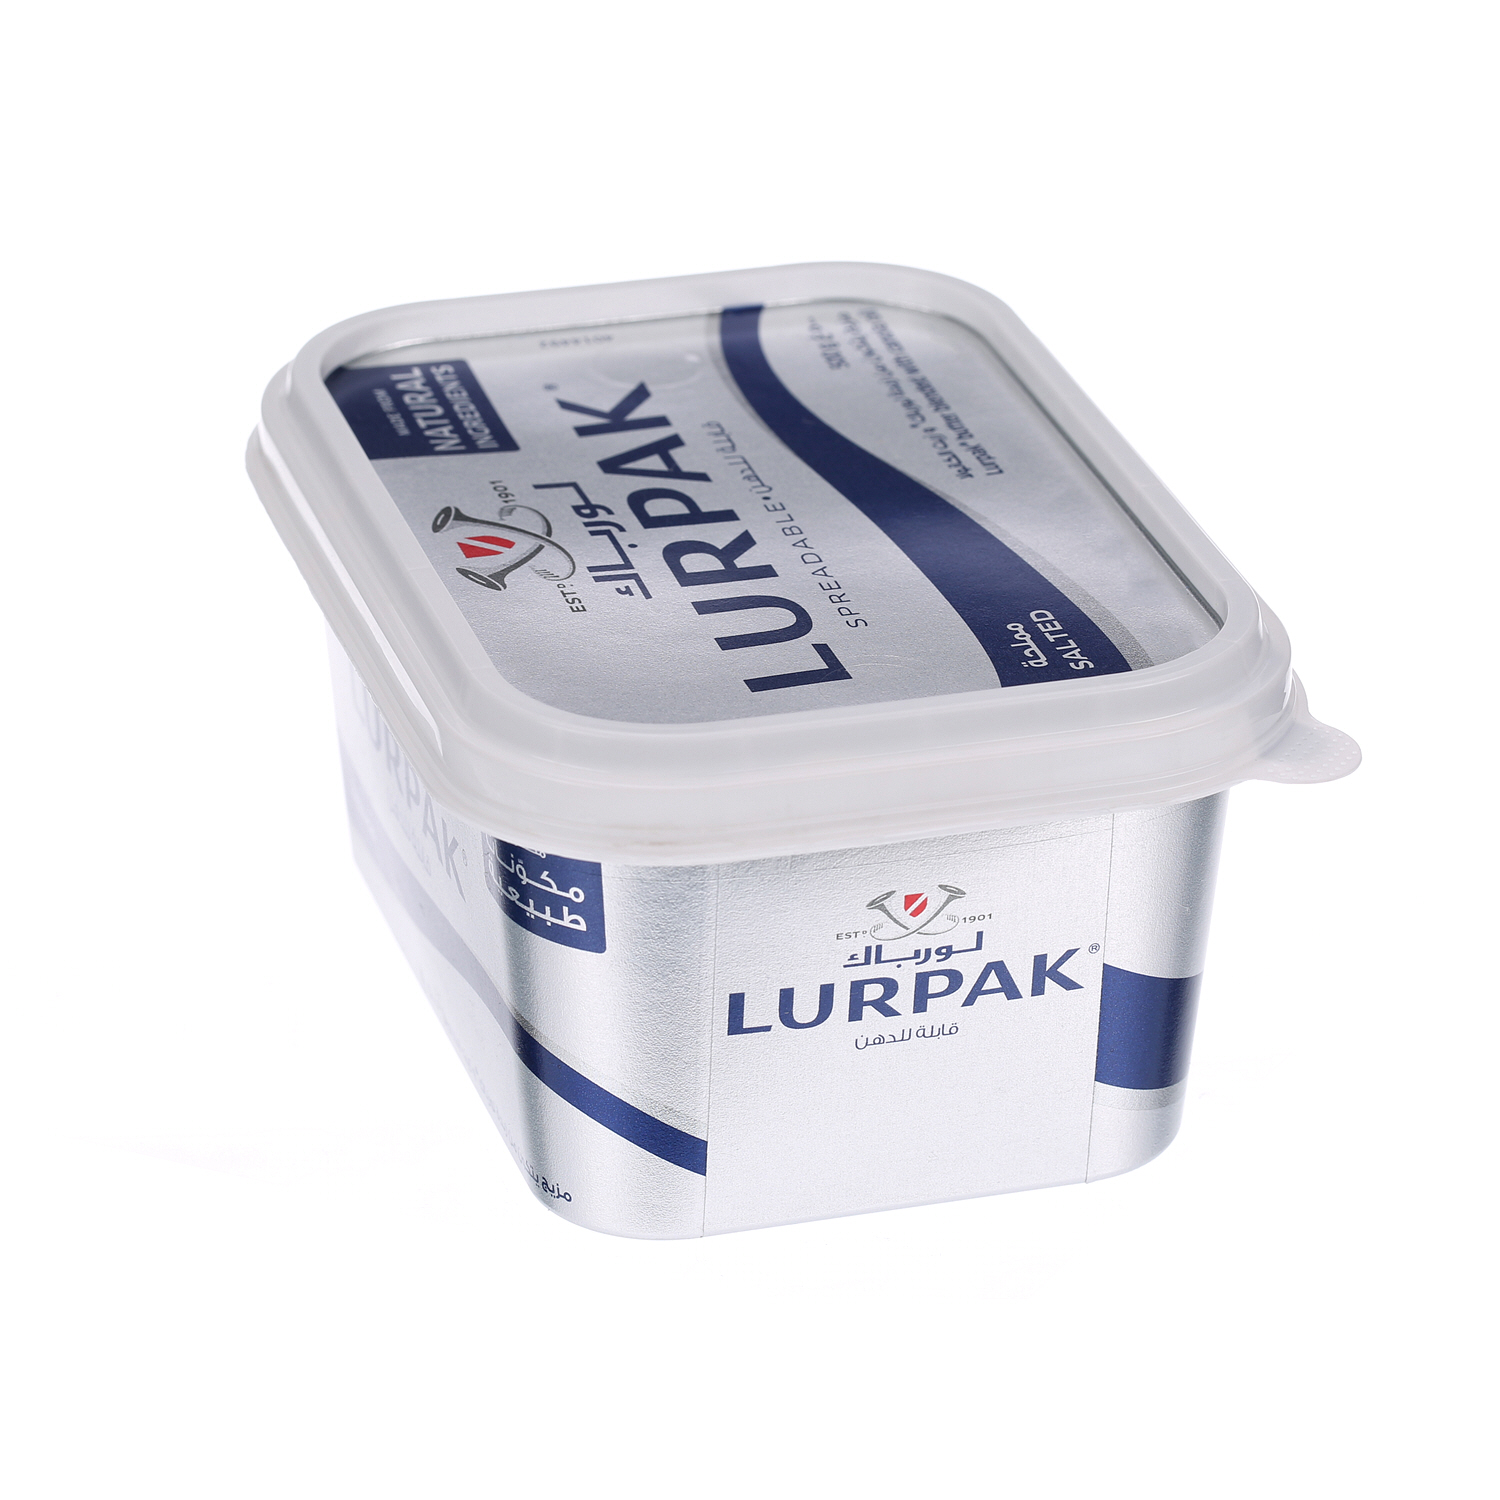 Lurpak Butter Spreadable Salted 500 g